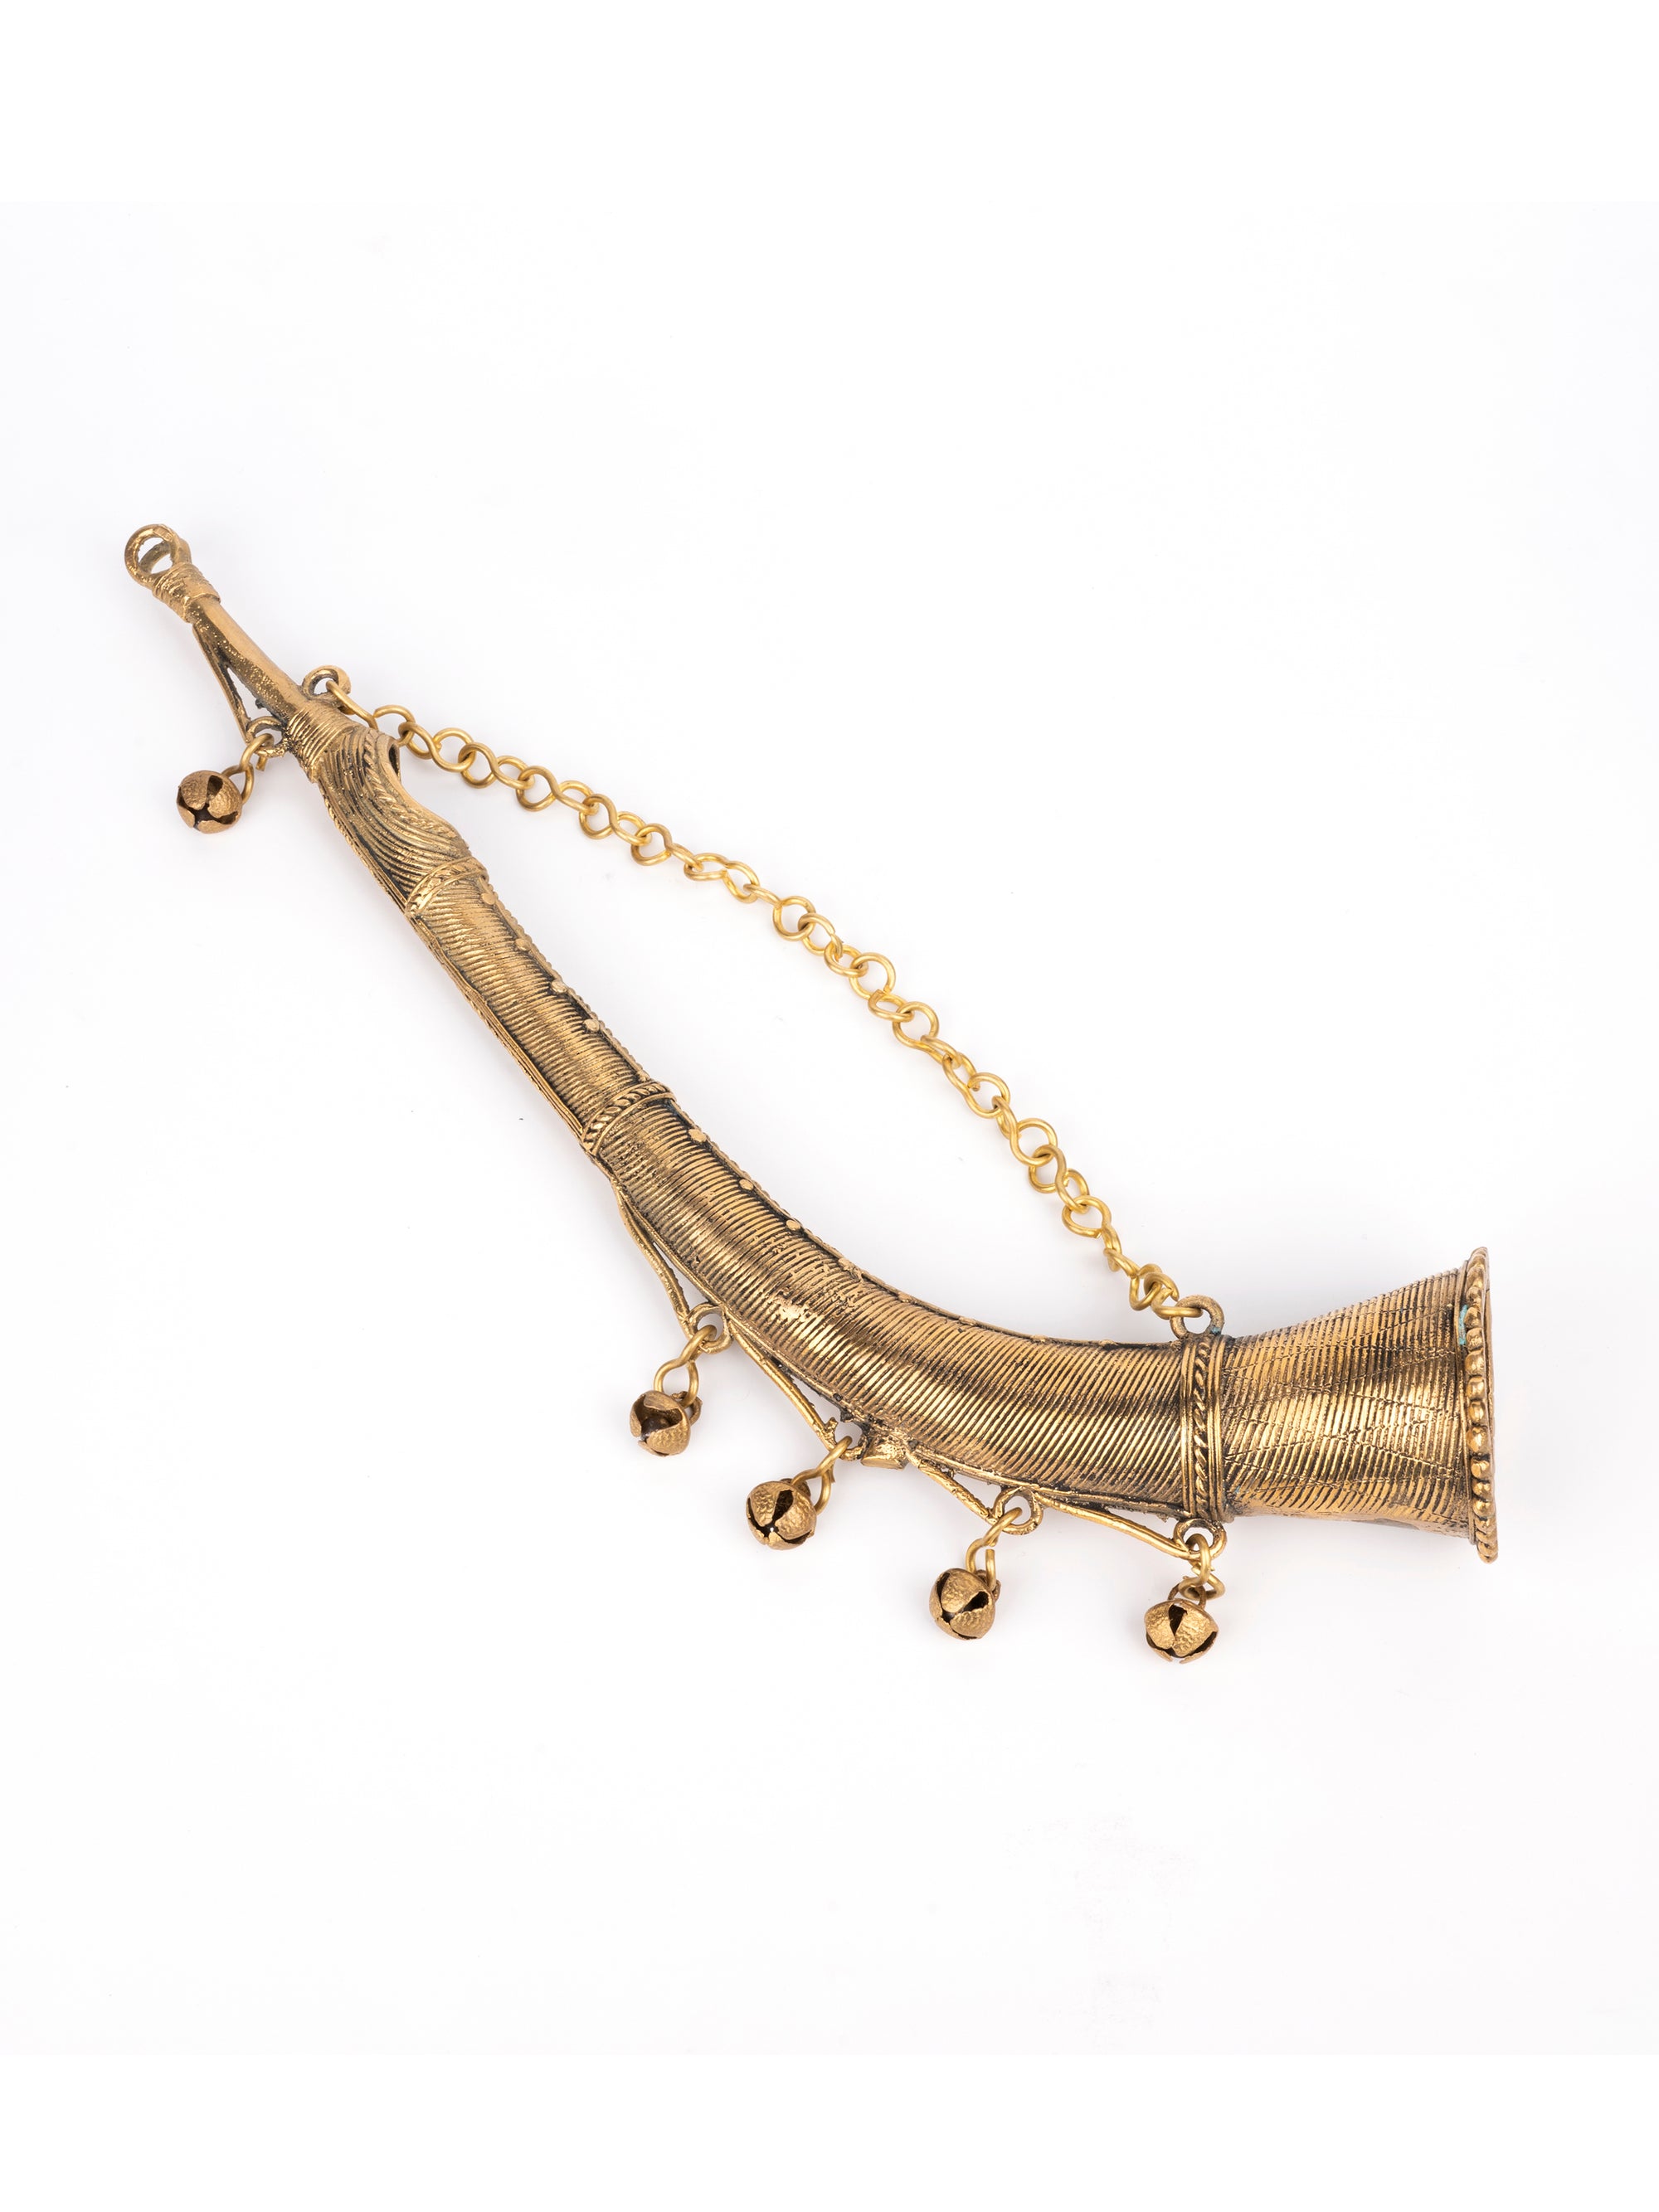 Dokra Art Musical Instrument Todi / Trumpet Hanging Showpiece - The Heritage Artifacts